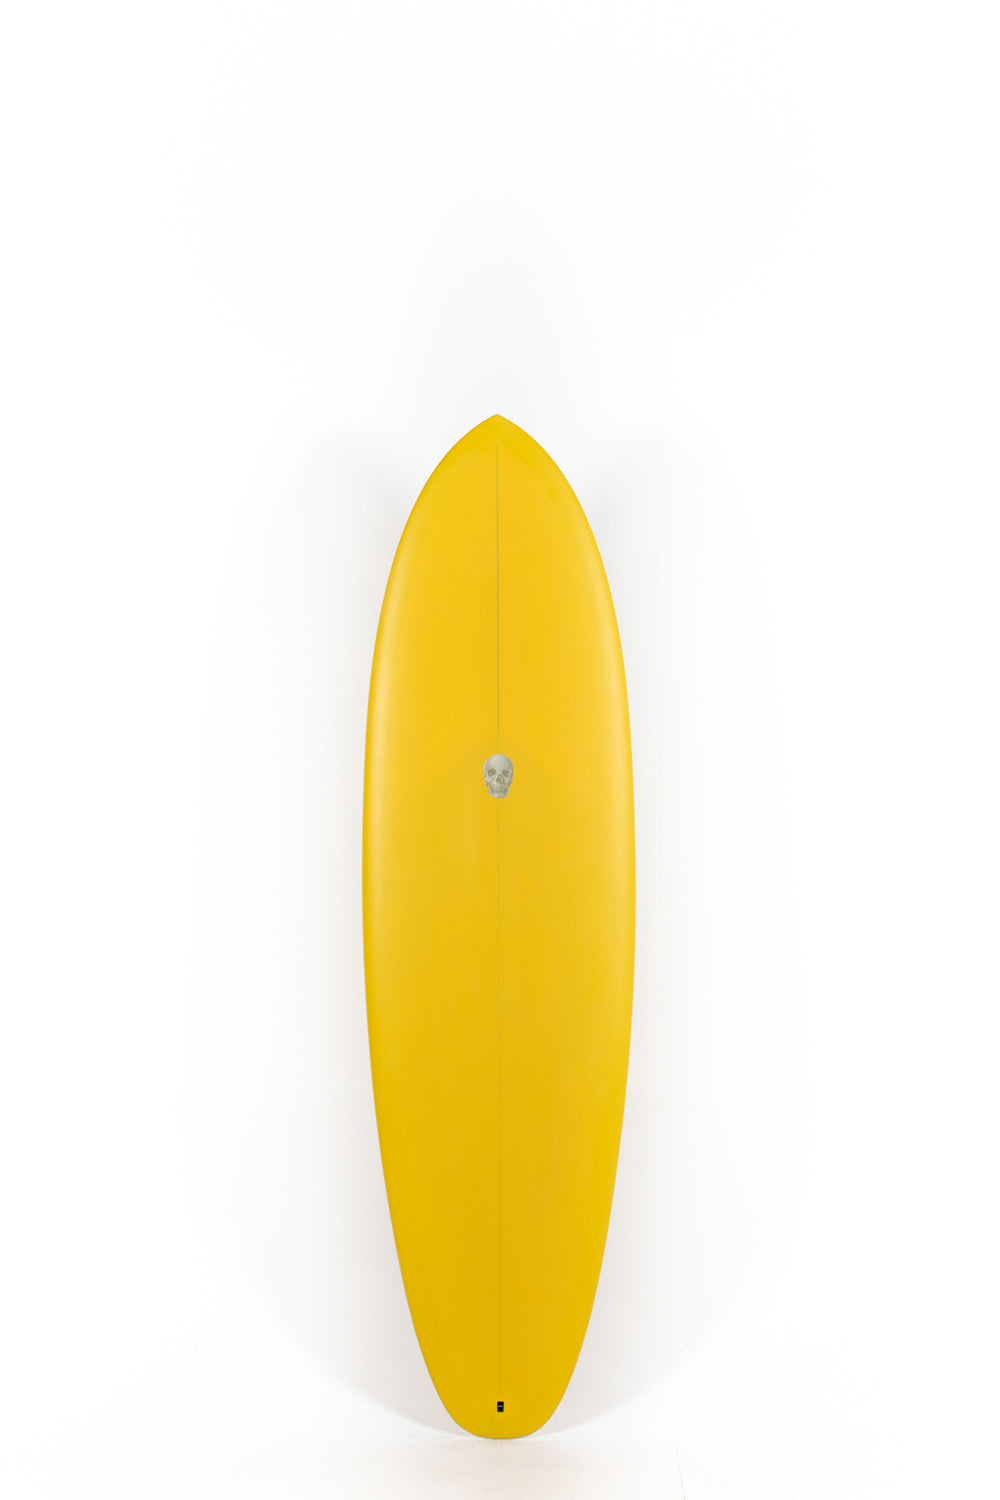 Pukas Surf shop - Christenson Surfboards - TWIN TRACKER - 6'6